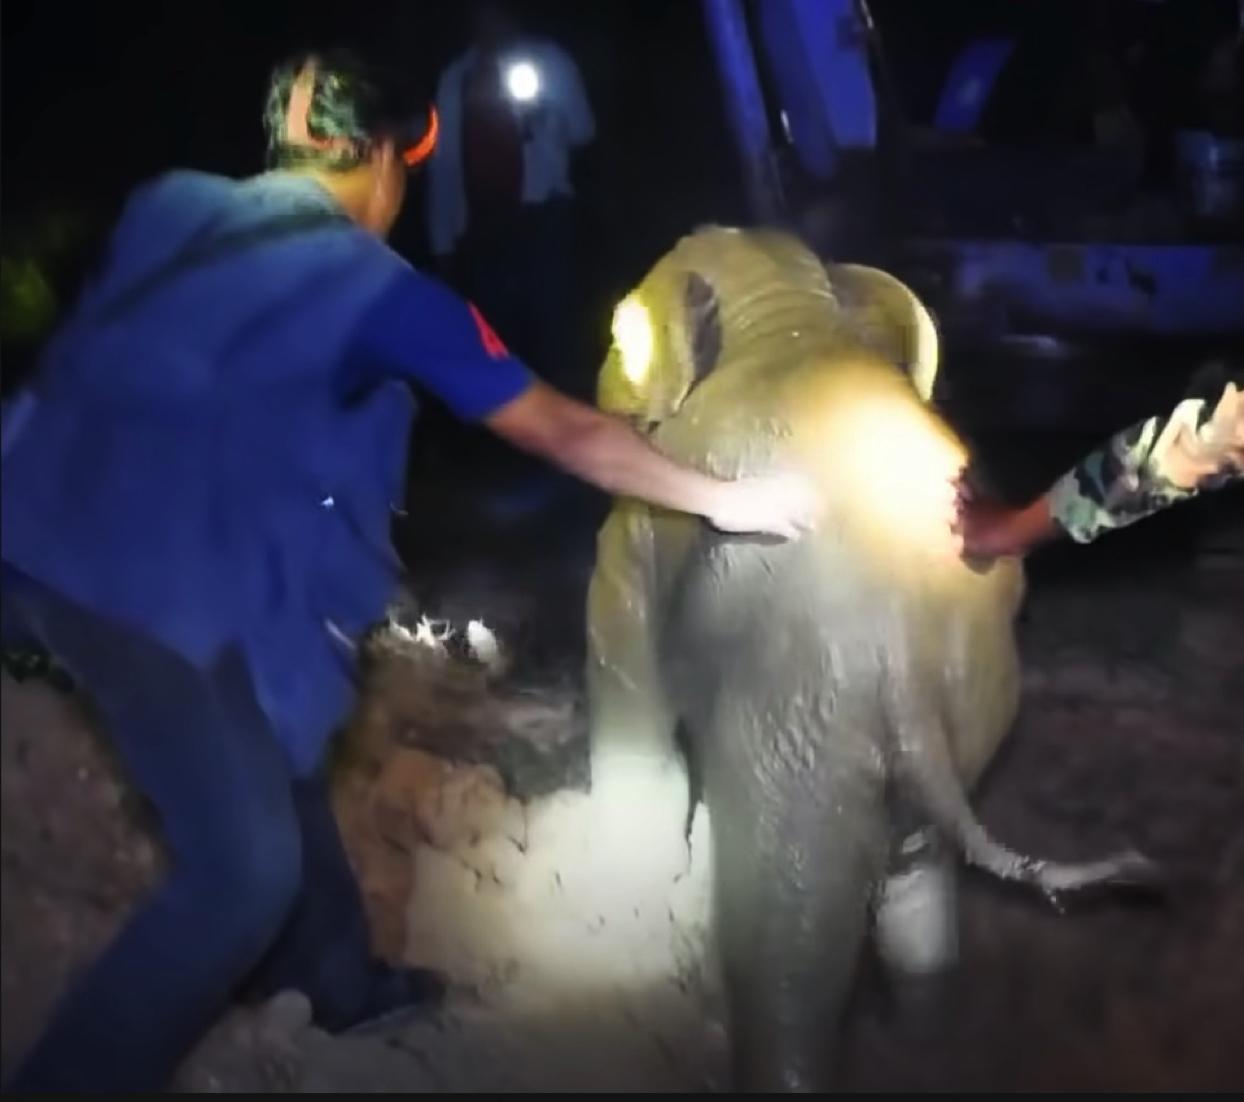 Anak Dalam Bahaya Terperangkap Dalam Lubang Konkrit, Ibu Gajah Panik Dan Menangis Minta Pertolongan